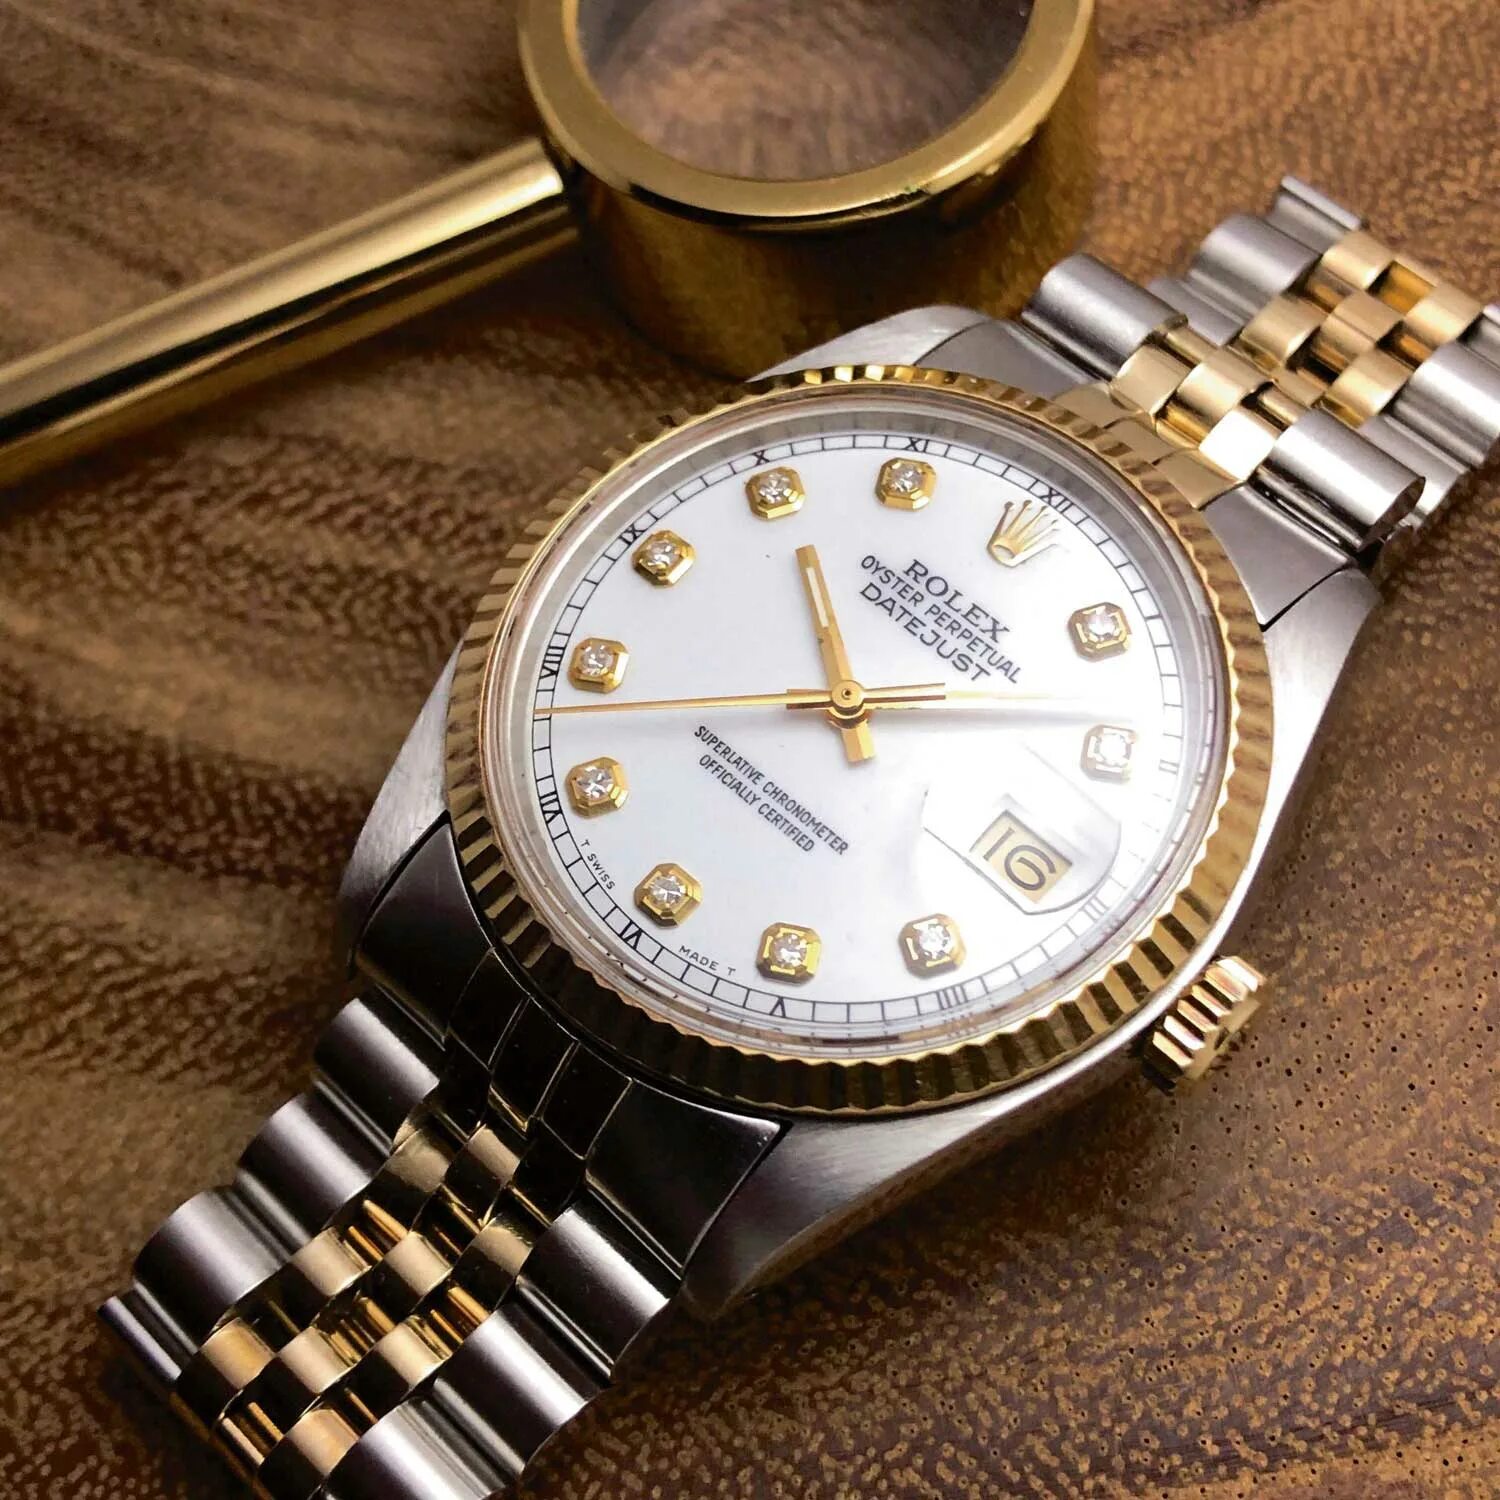 Tone watch. Rolex Datejust Gold. Rolex Datejust bicolor. Rolex Datejust 2 Gold. Rolex Datejust 41 bicolor Black.